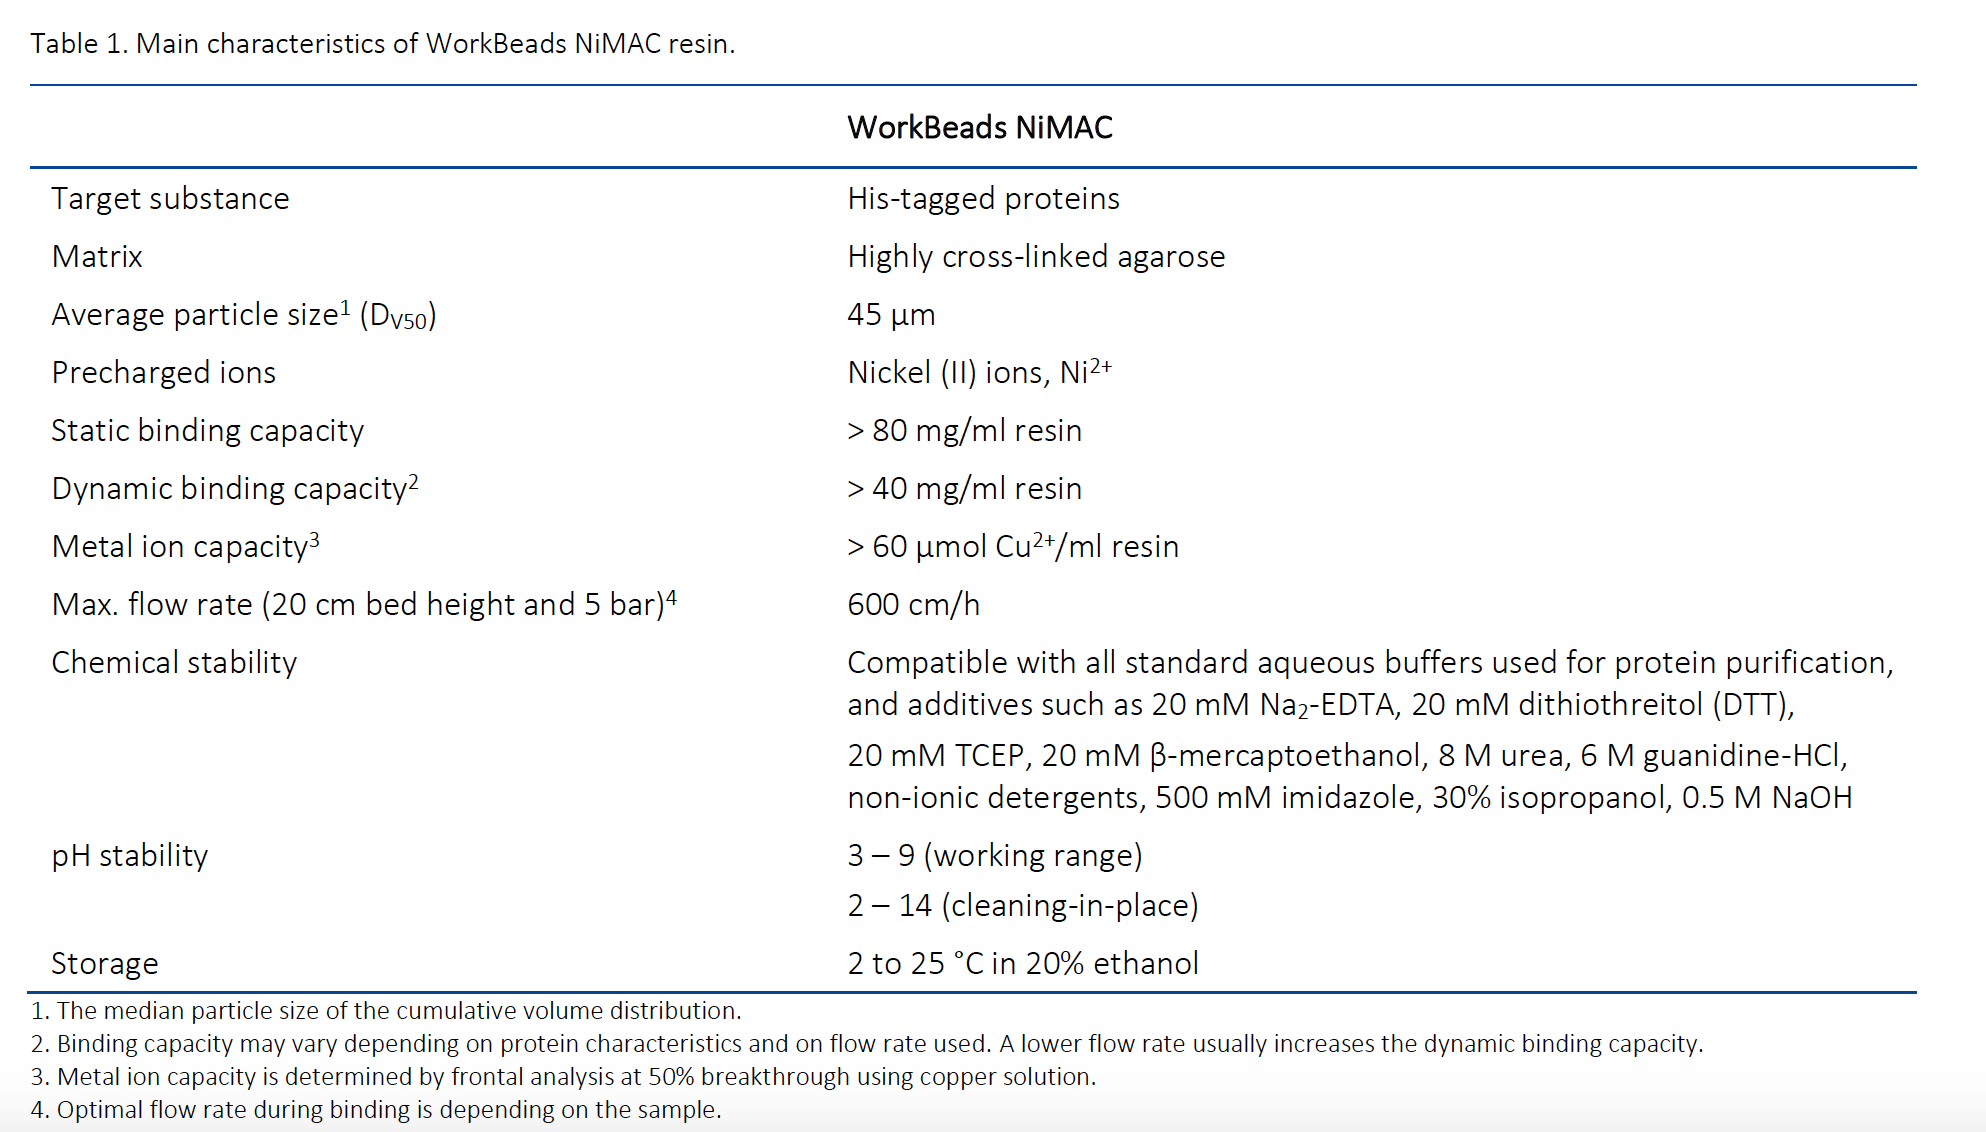 WorkBeads NiMAC characteristics Table 210331